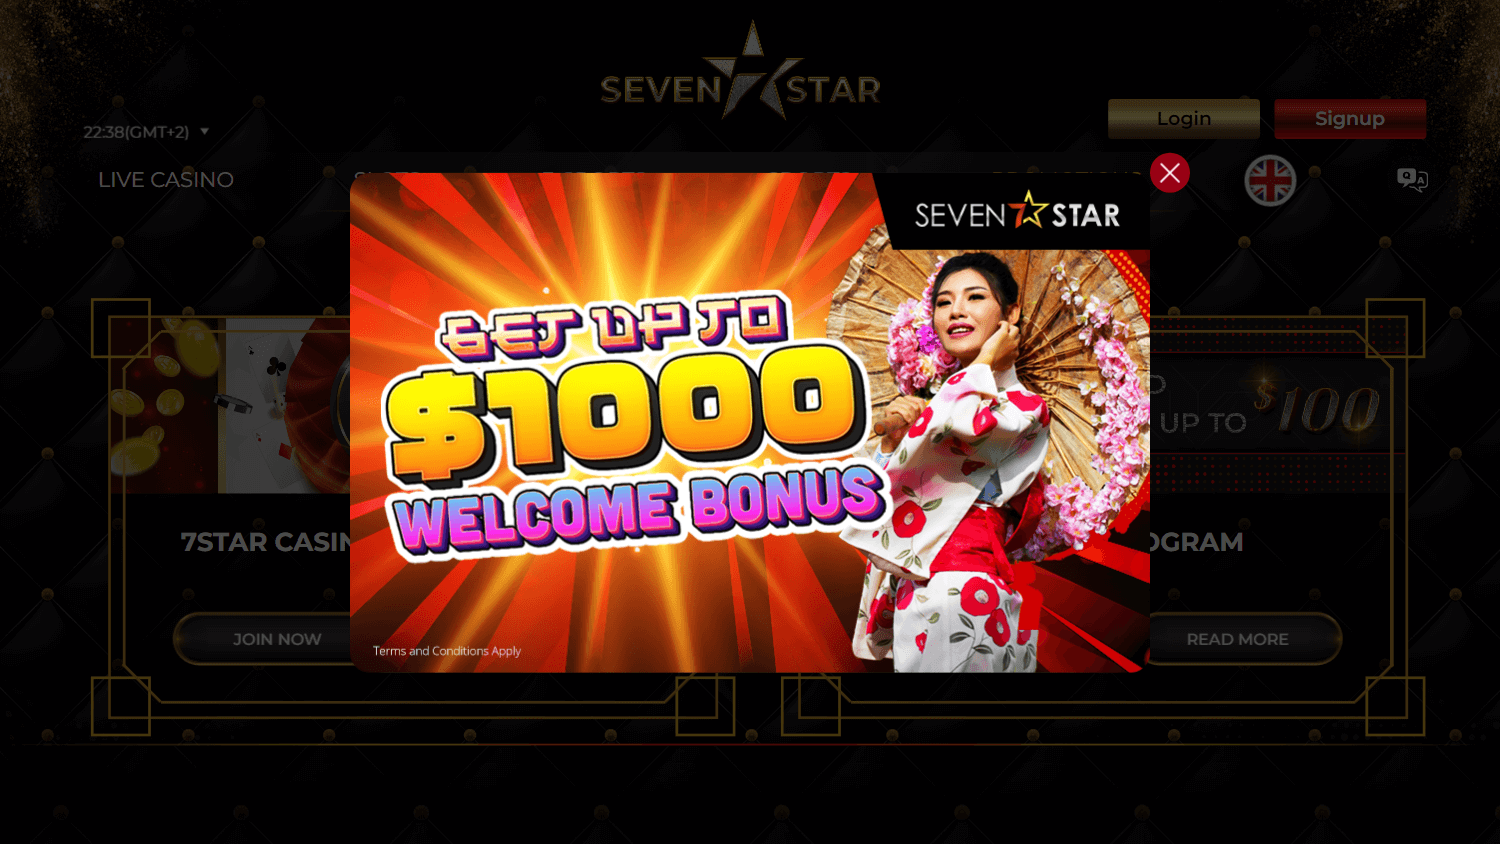 7star_casino_promotions_desktop